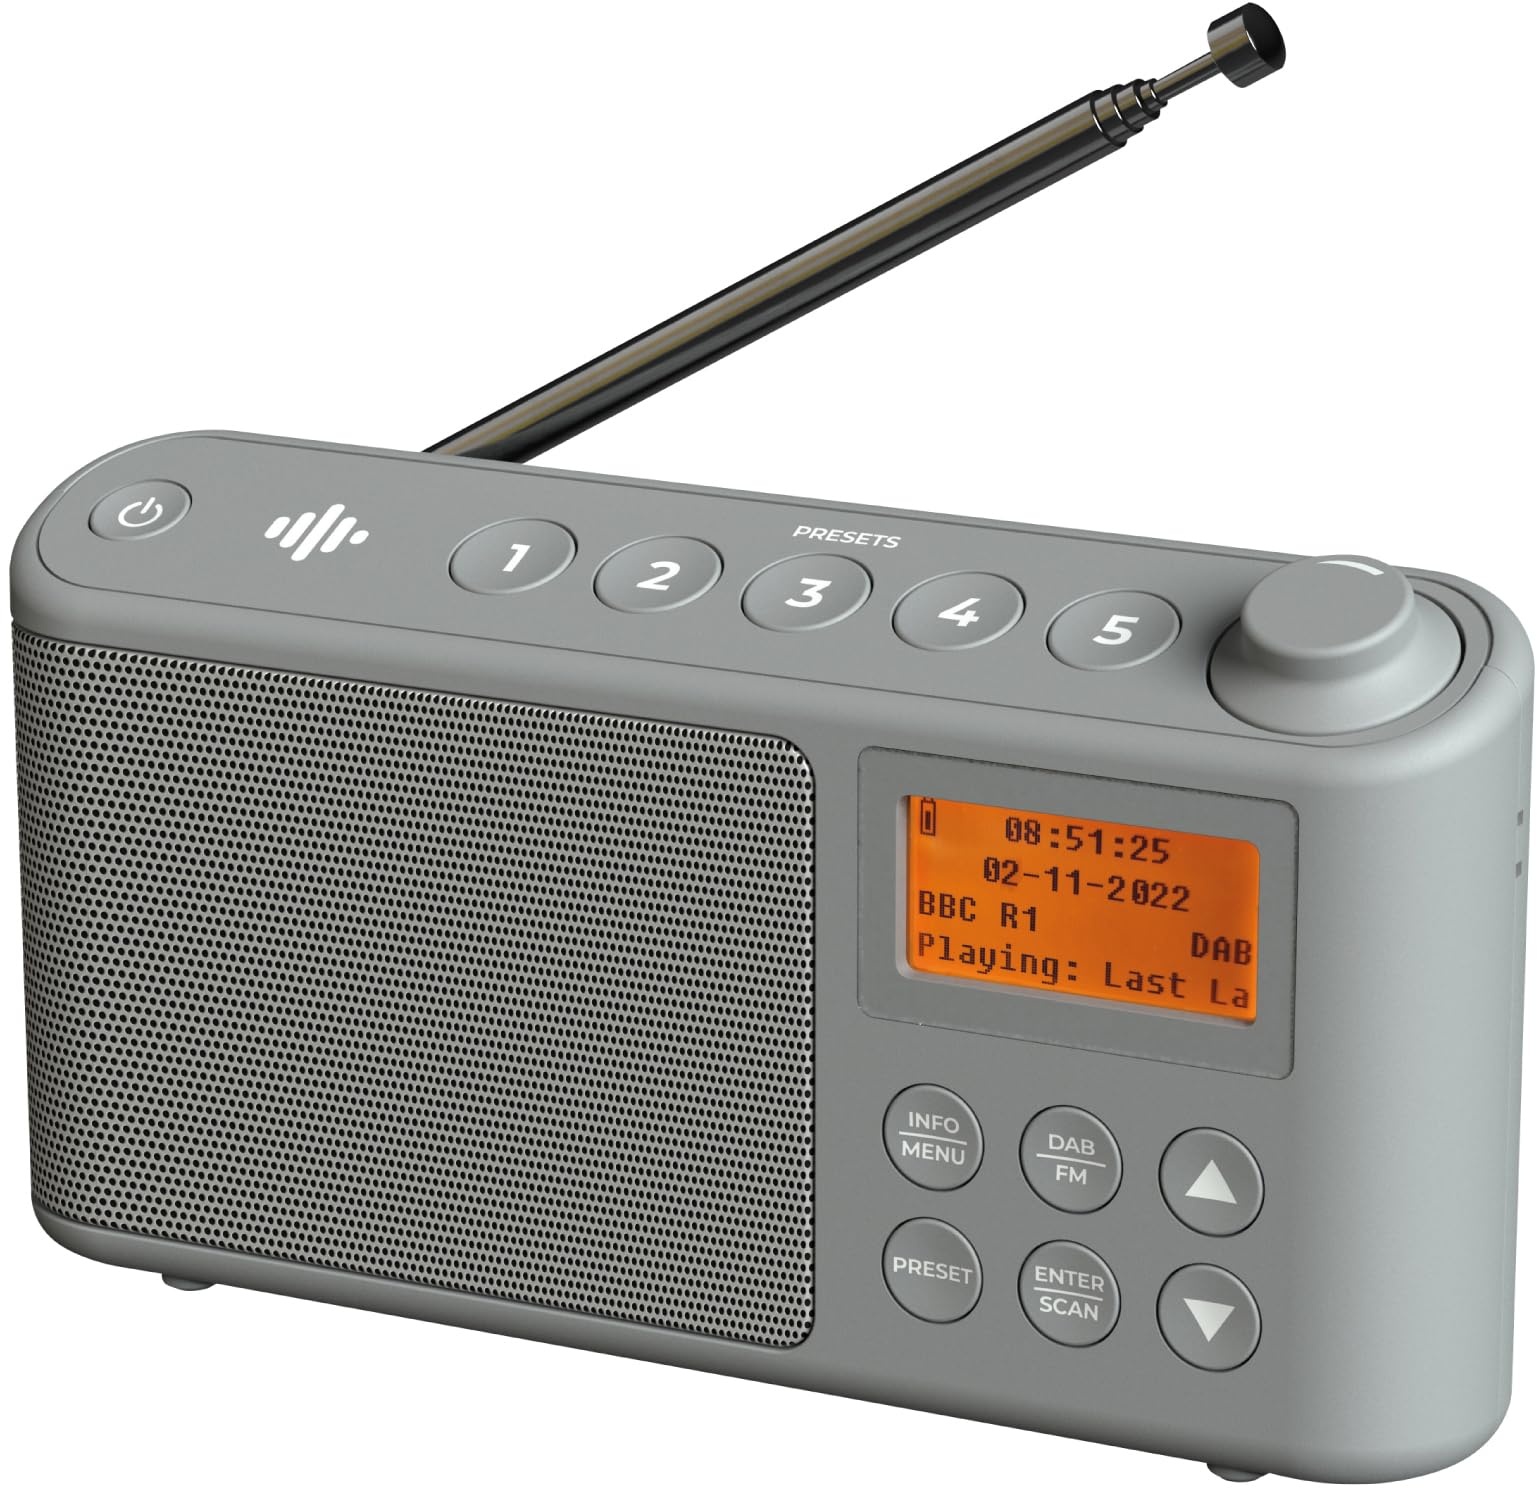 DAB/DAB Plus/FM Radio, Klein Digitalradio Tragbares Batteriebetrieben, Mini Radio Digital Akku & Netzbetrieb Kofferradio, USB-Ladekabel (Grau)